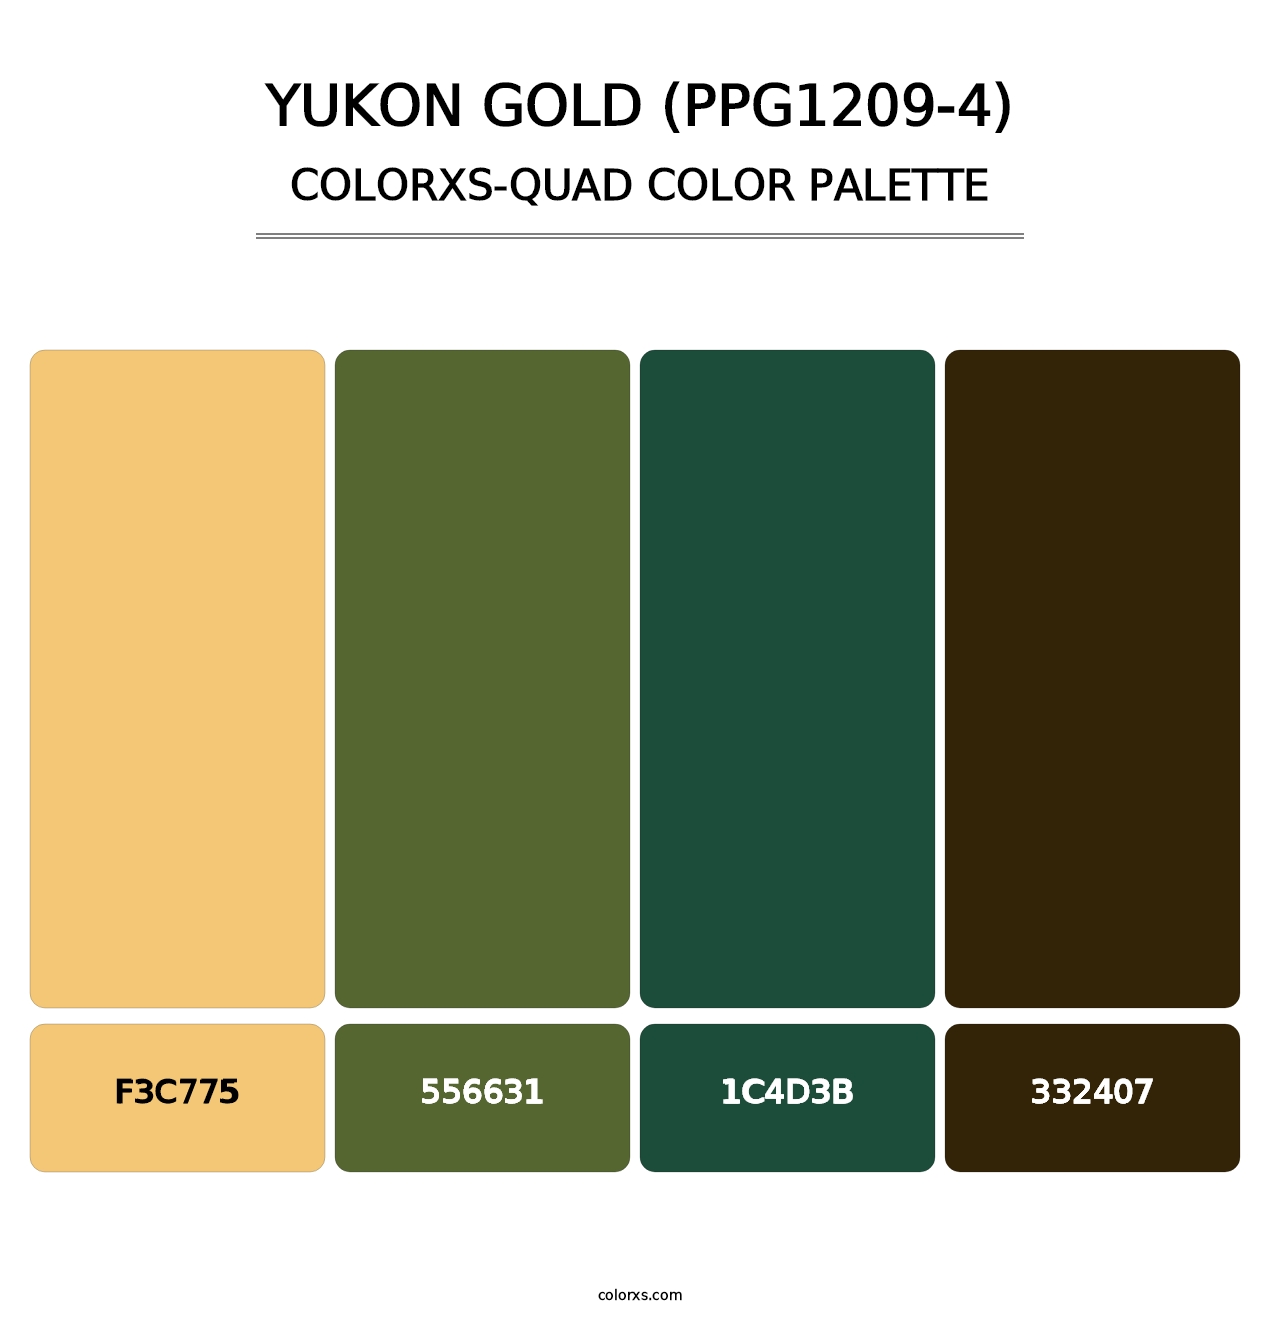 Yukon Gold (PPG1209-4) - Colorxs Quad Palette